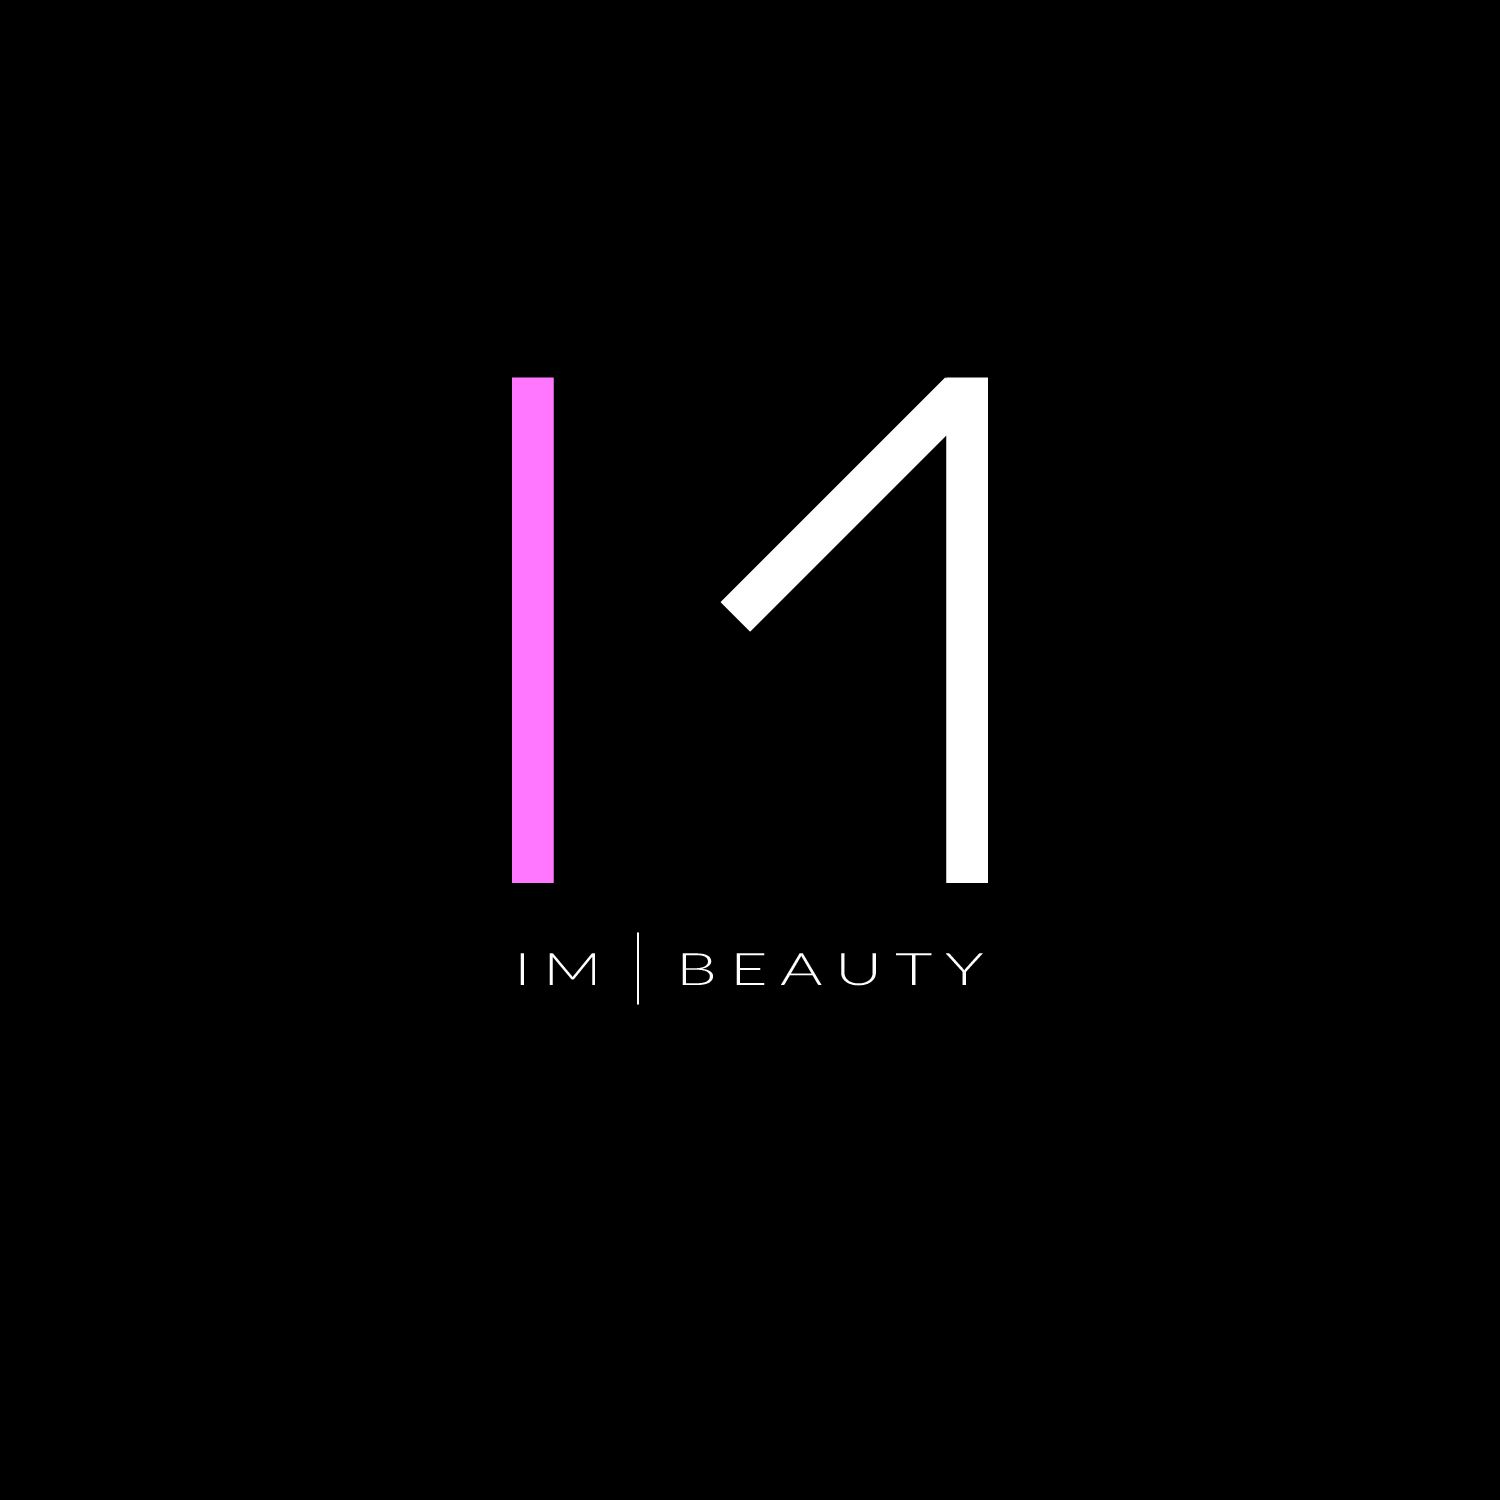 Im Logo - Upmarket, Modern Logo Design for IM beauty by Jason Brown. Design